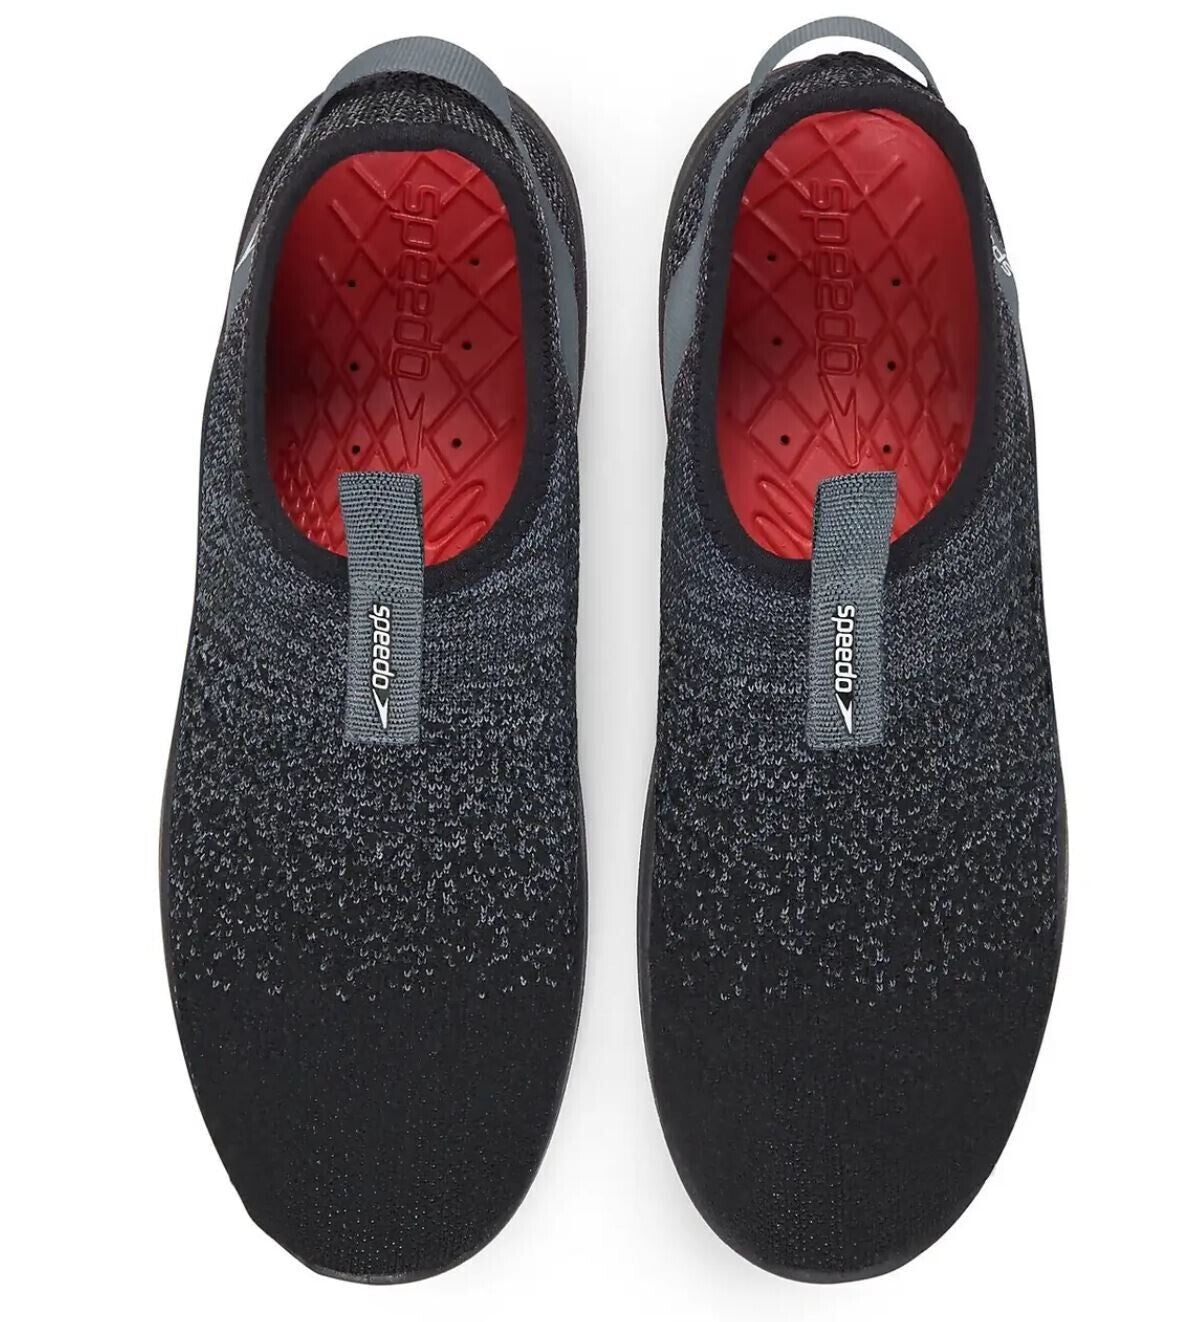 Speedo Men's Black/Gray Size 8 Surf Knit Pro Water Shoes